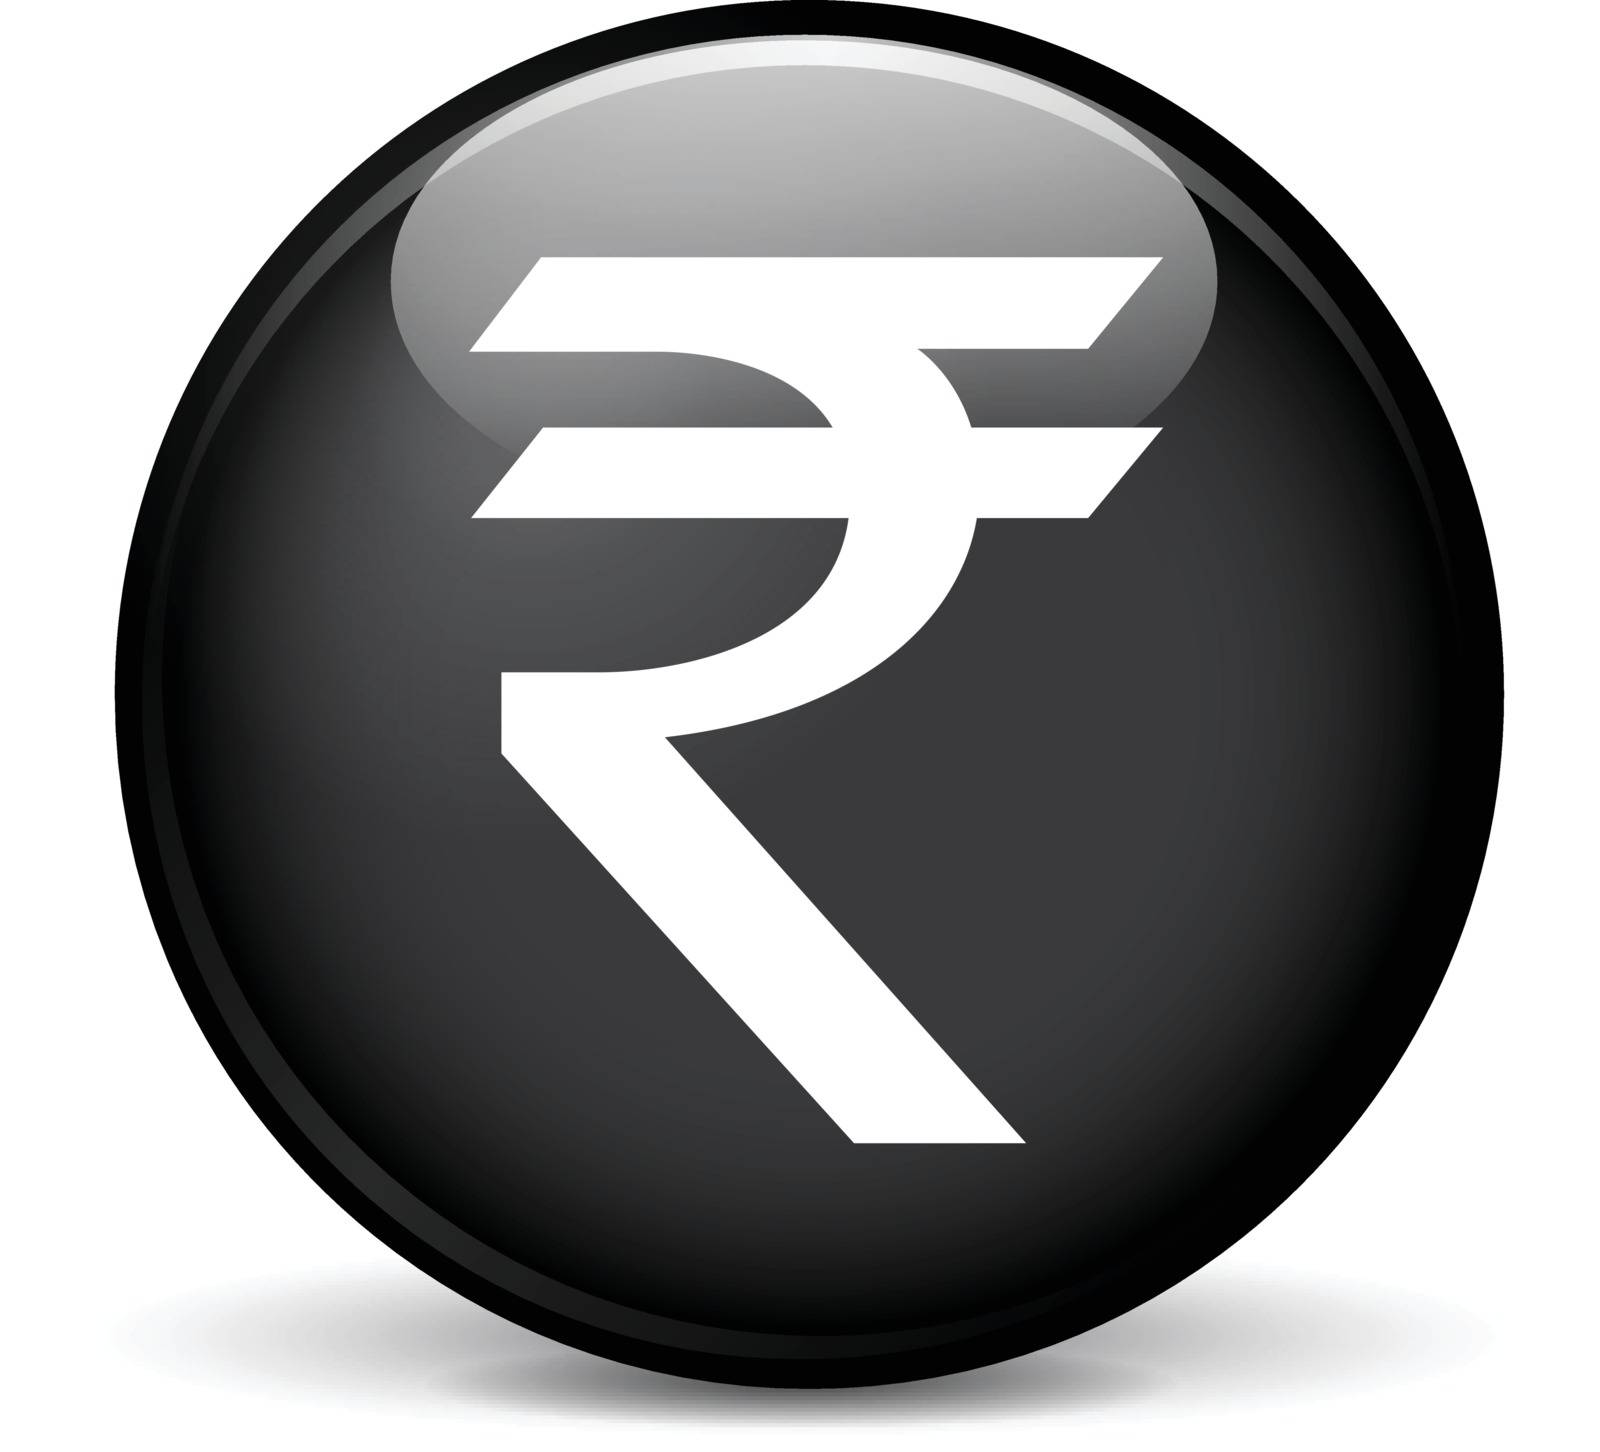 rupee icon by nickylarson974